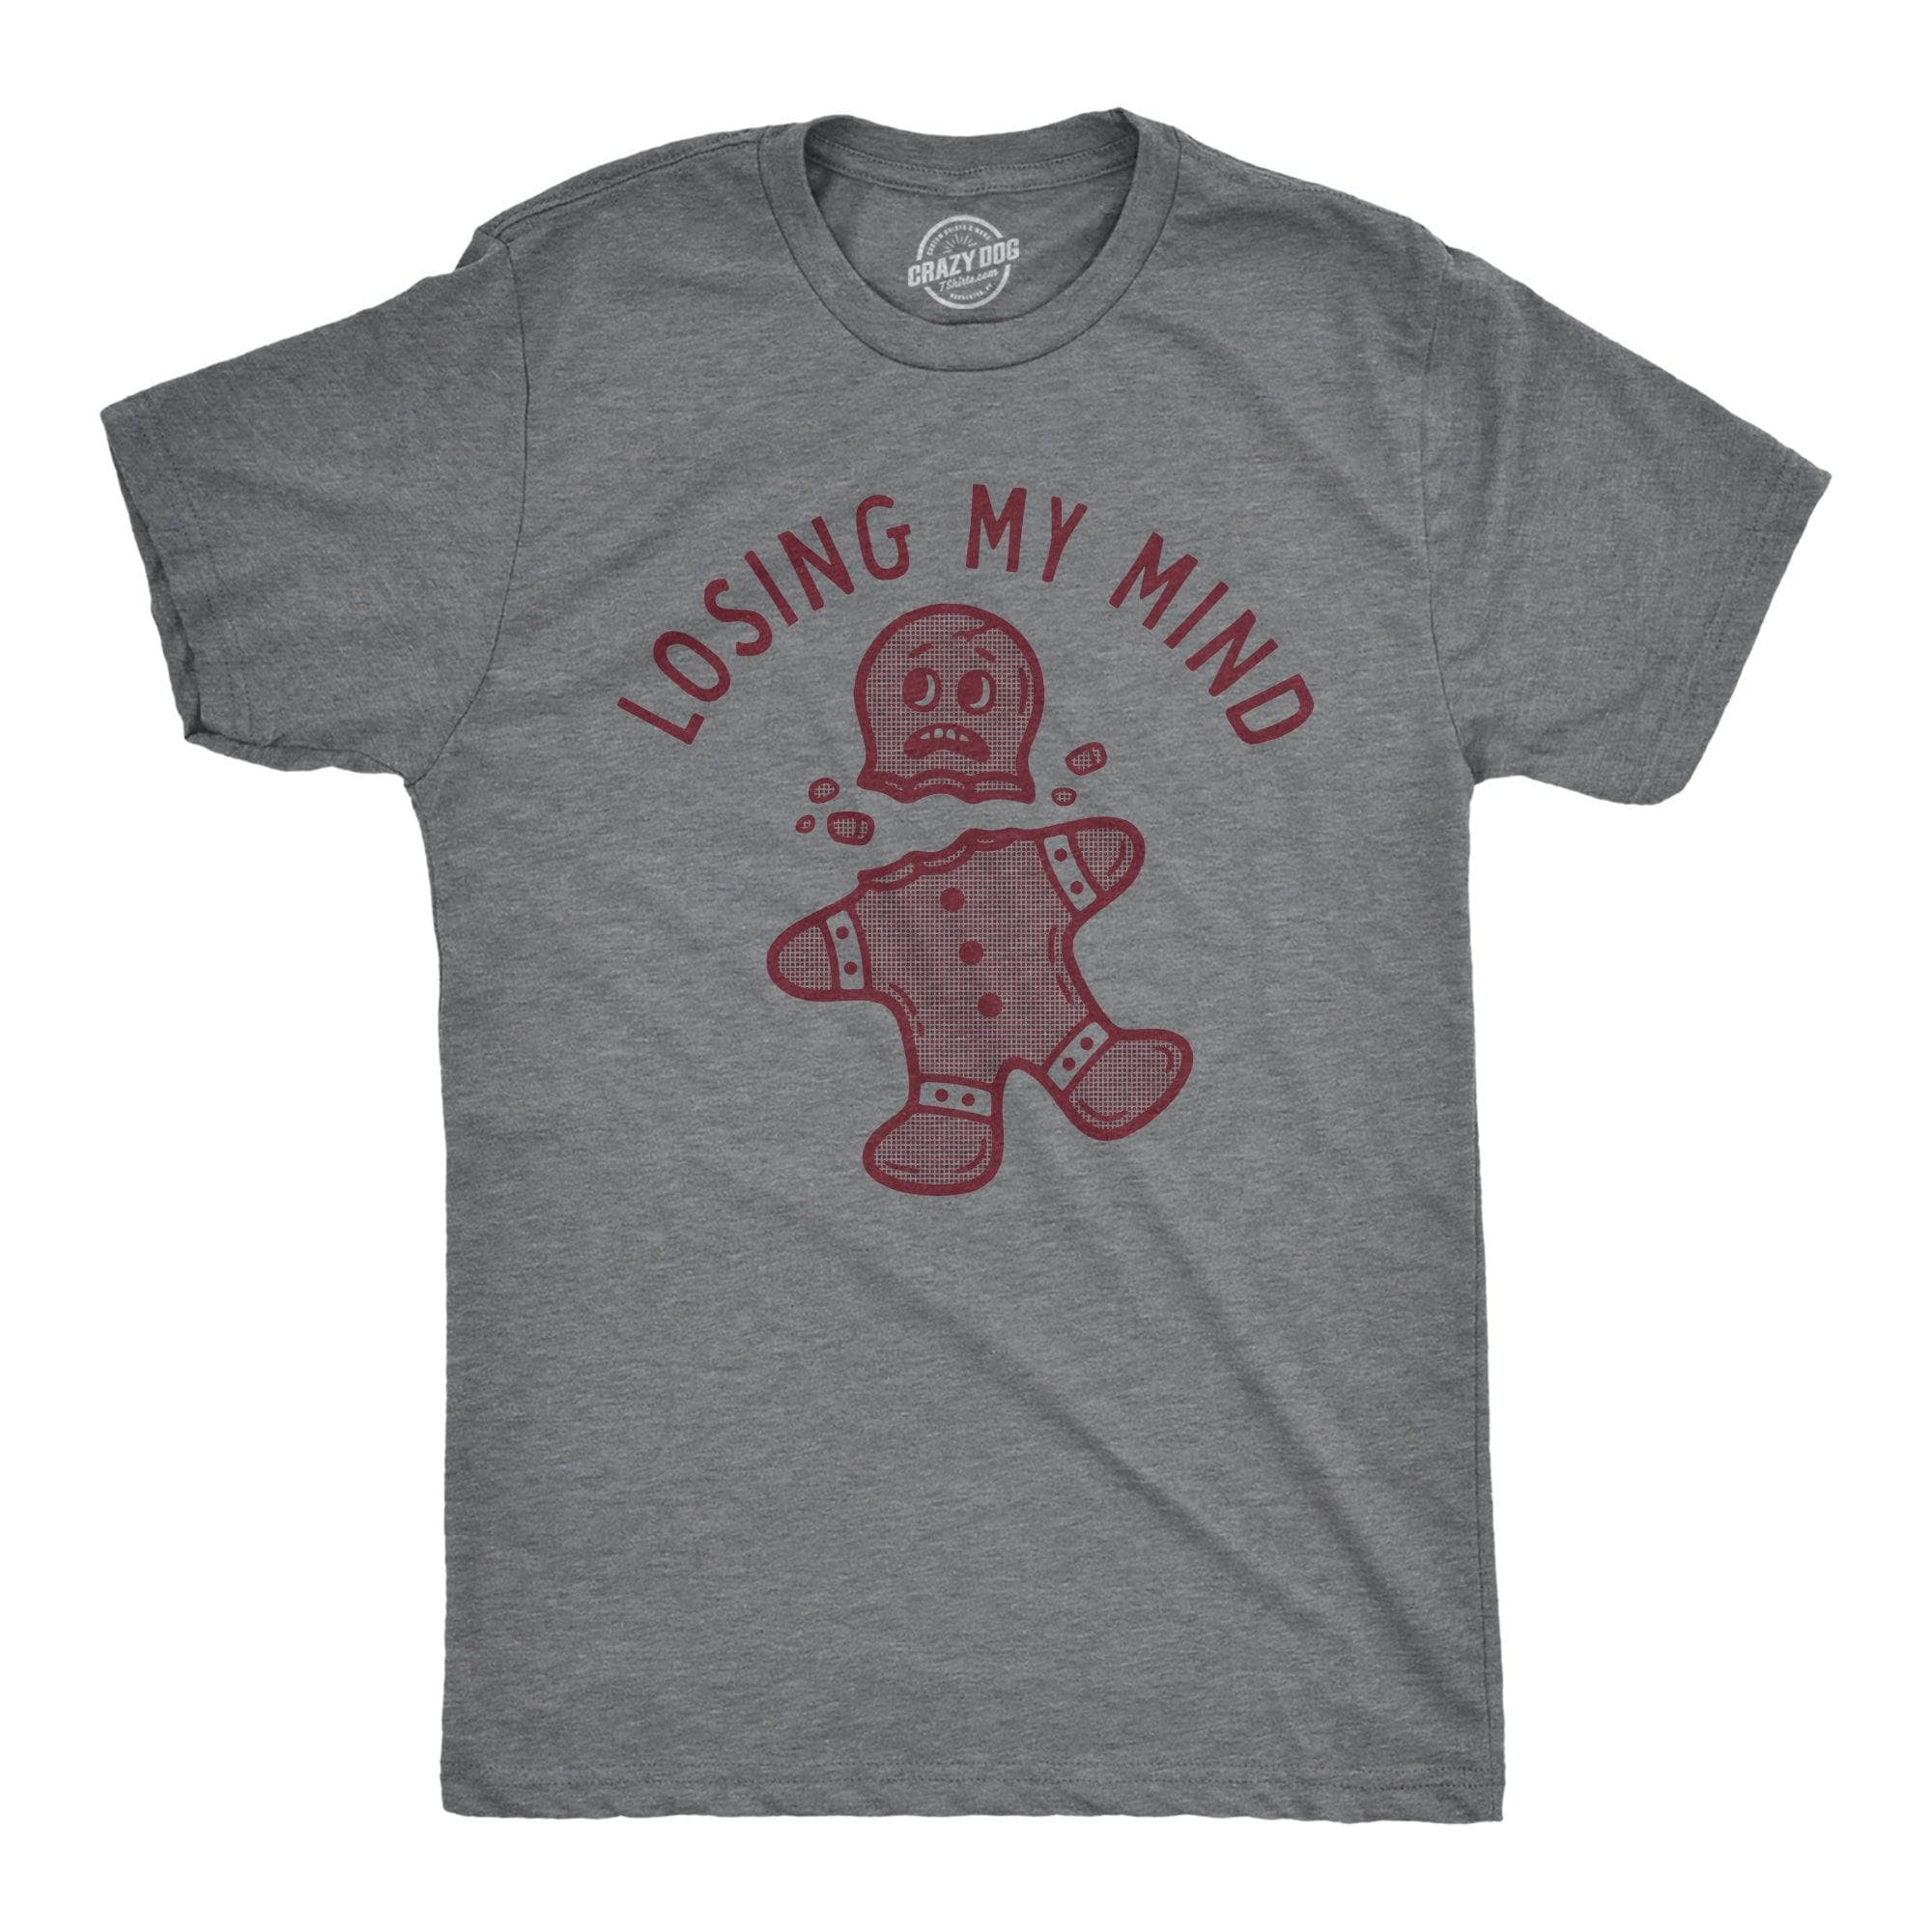 Losing My Mind Men's Tshirt  -  Crazy Dog T-Shirts